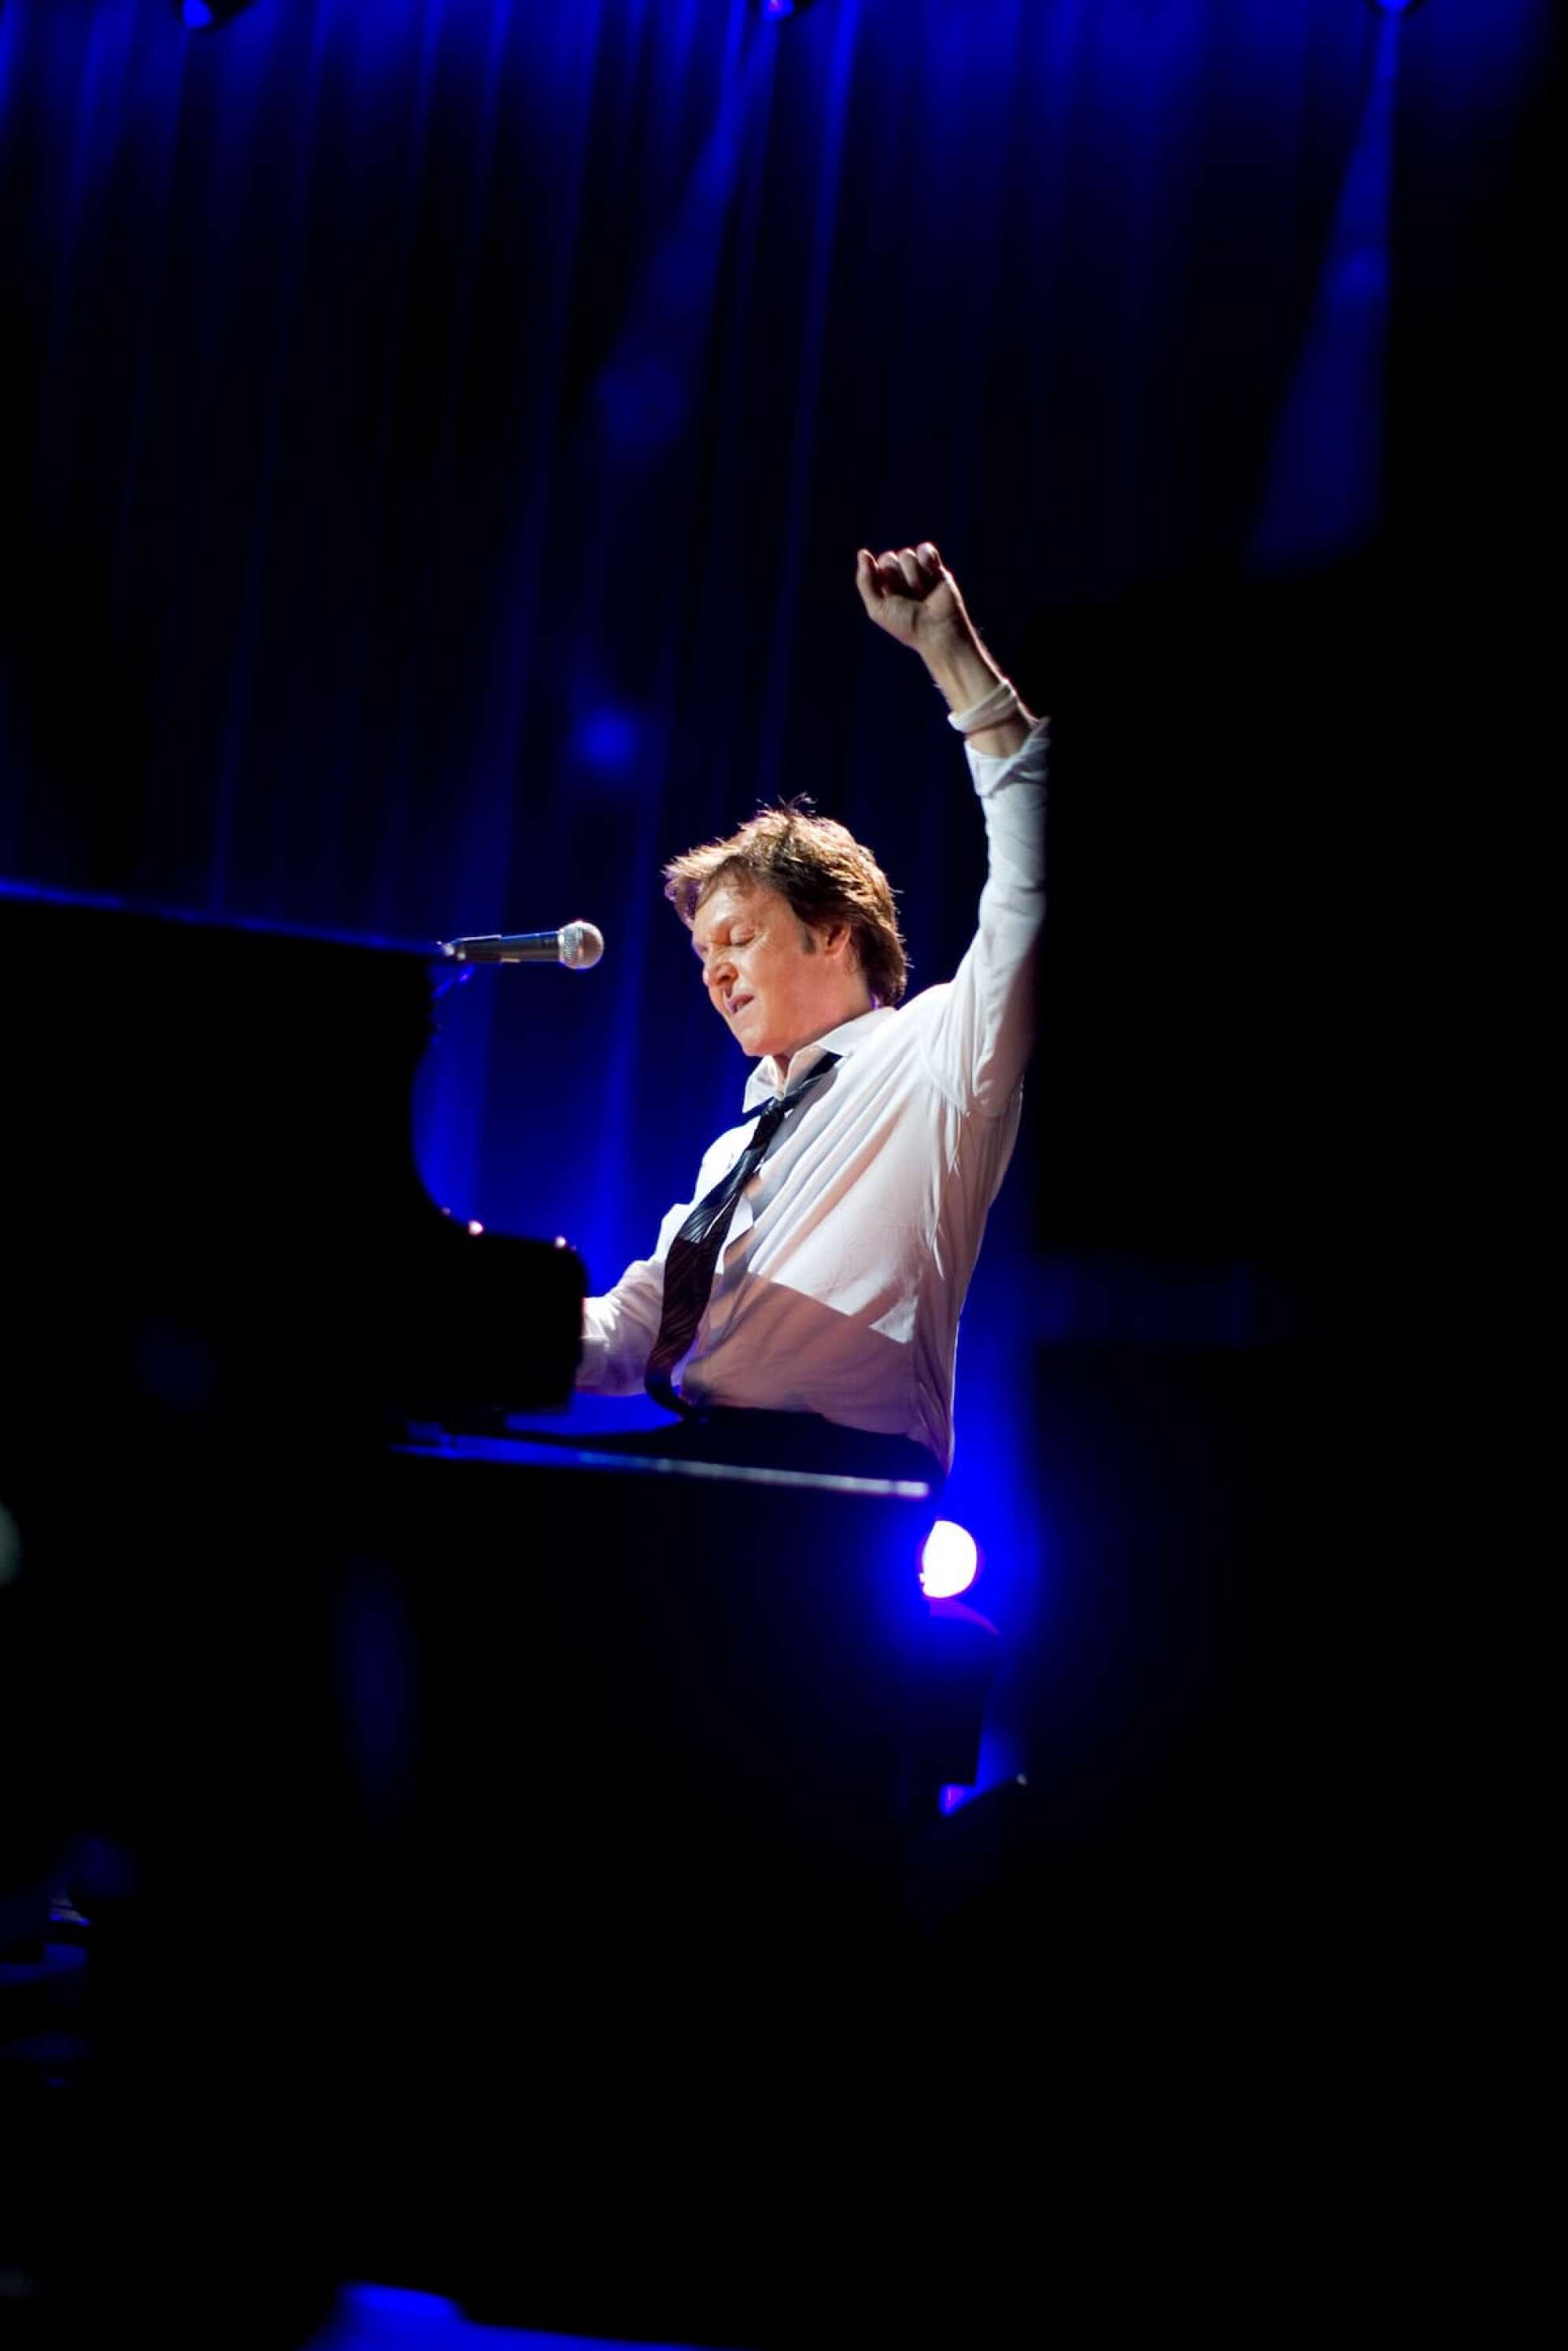 Paul McCartney am Klavier